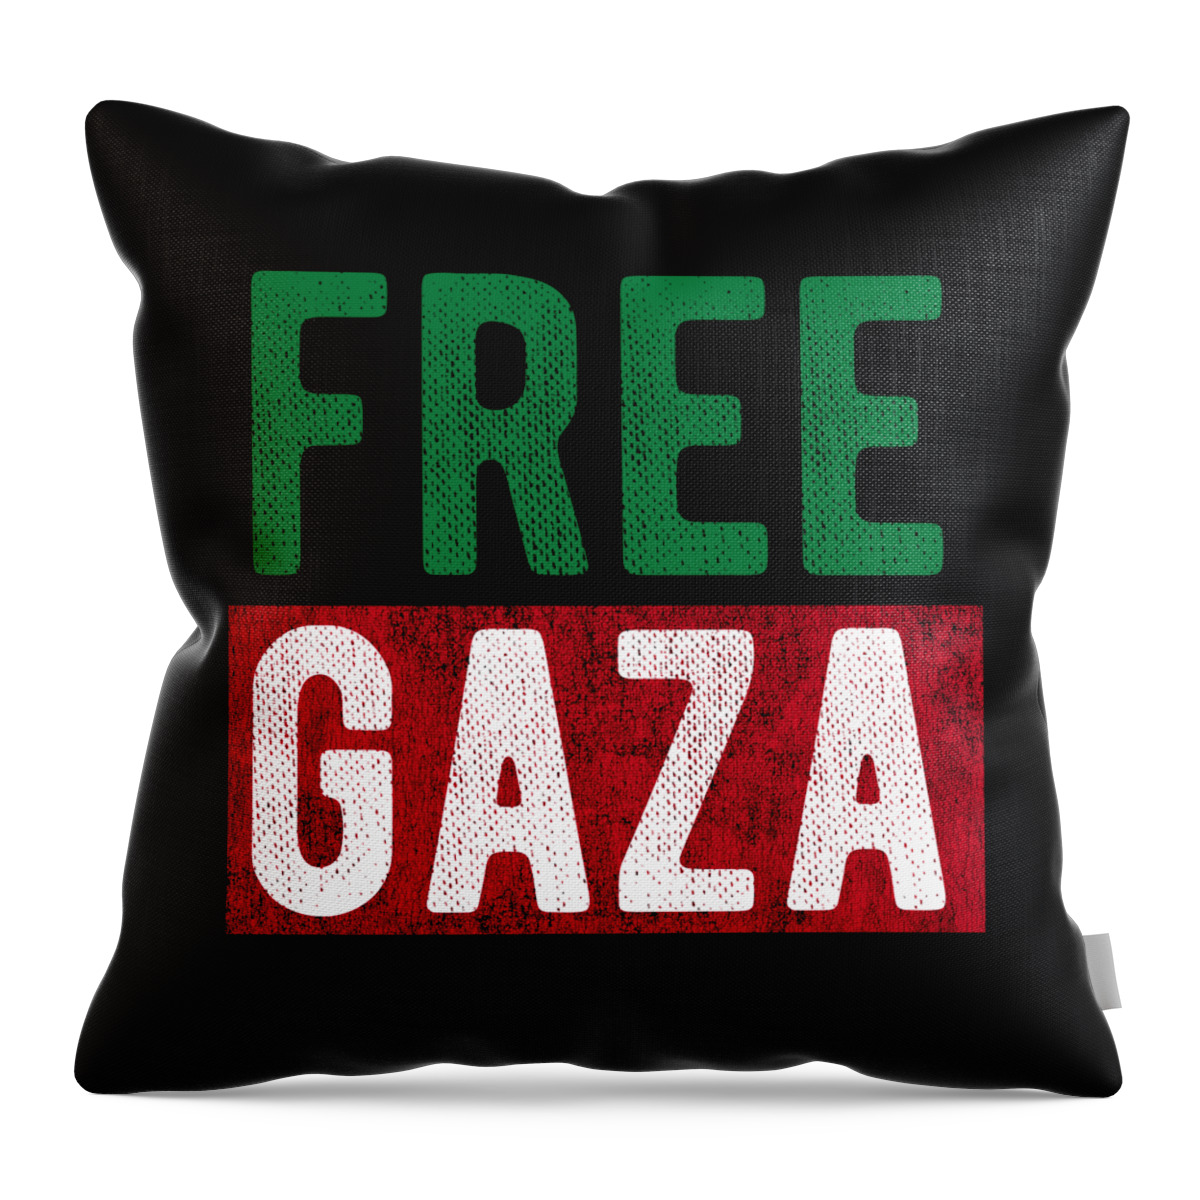 Palestine Throw Pillow featuring the digital art Free Gaza Palestine by Flippin Sweet Gear